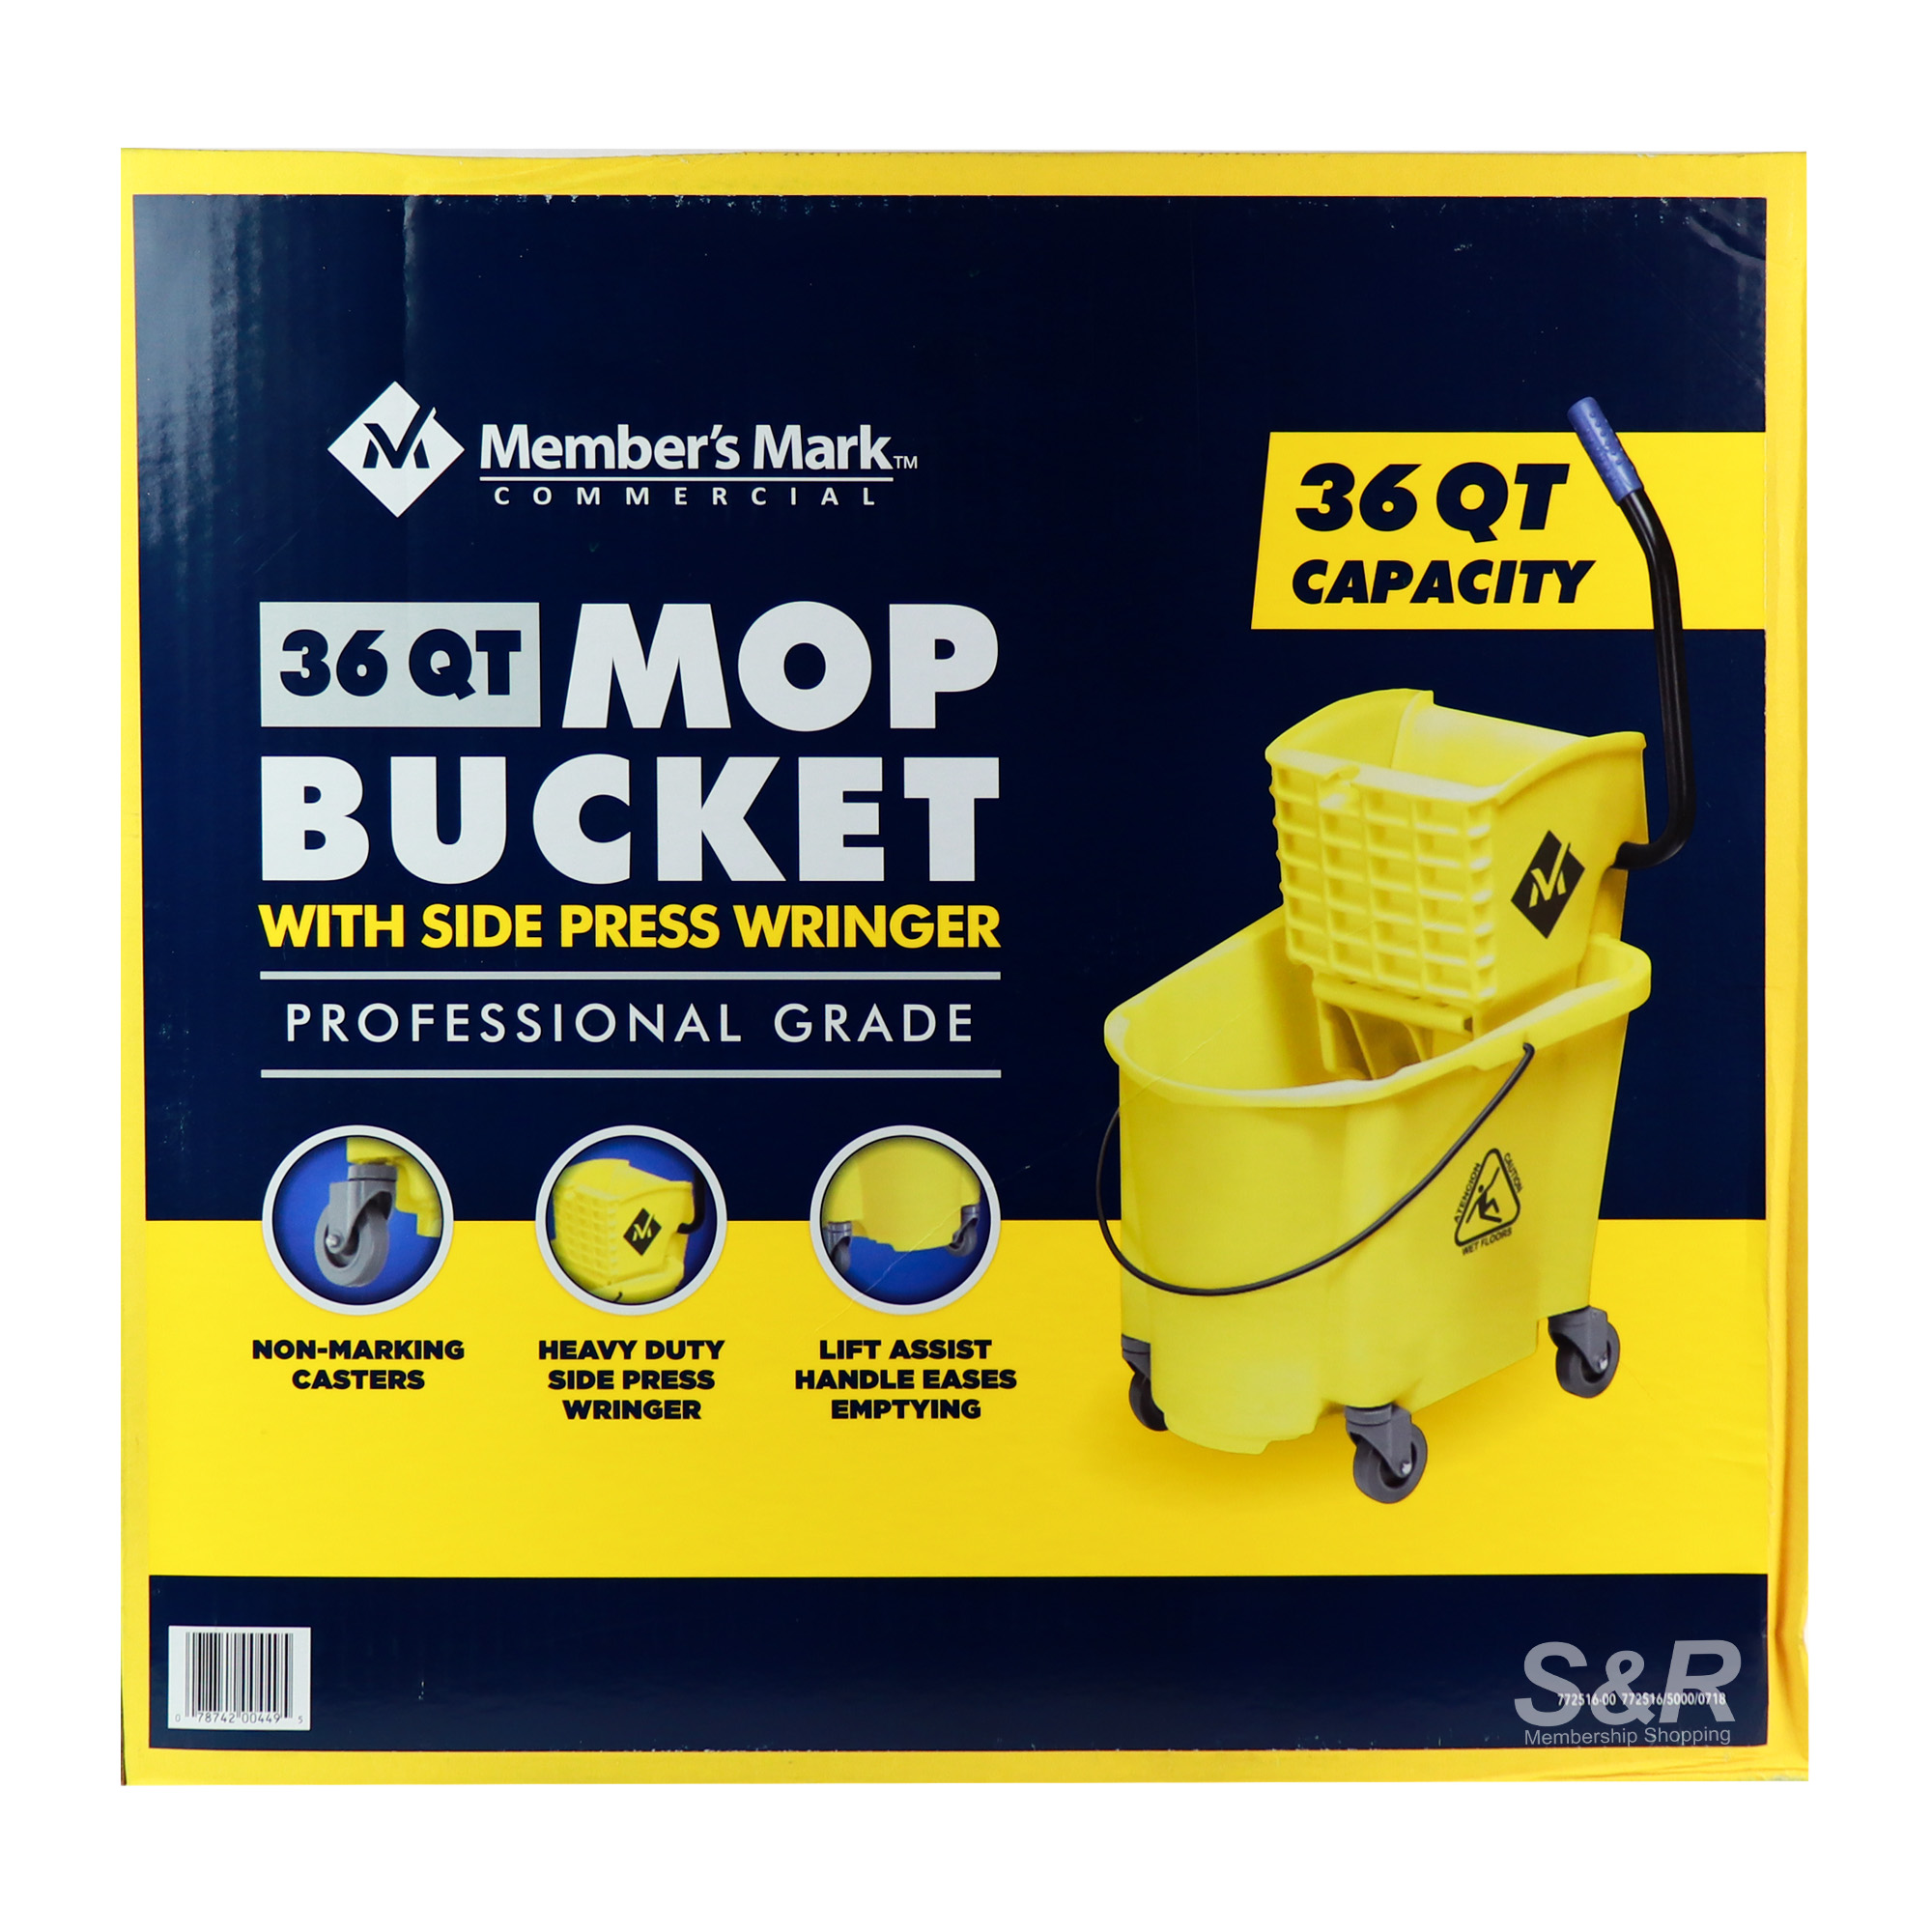 Member's Mark Commercial Mop Bucket with Side Press Wringer 34.07L